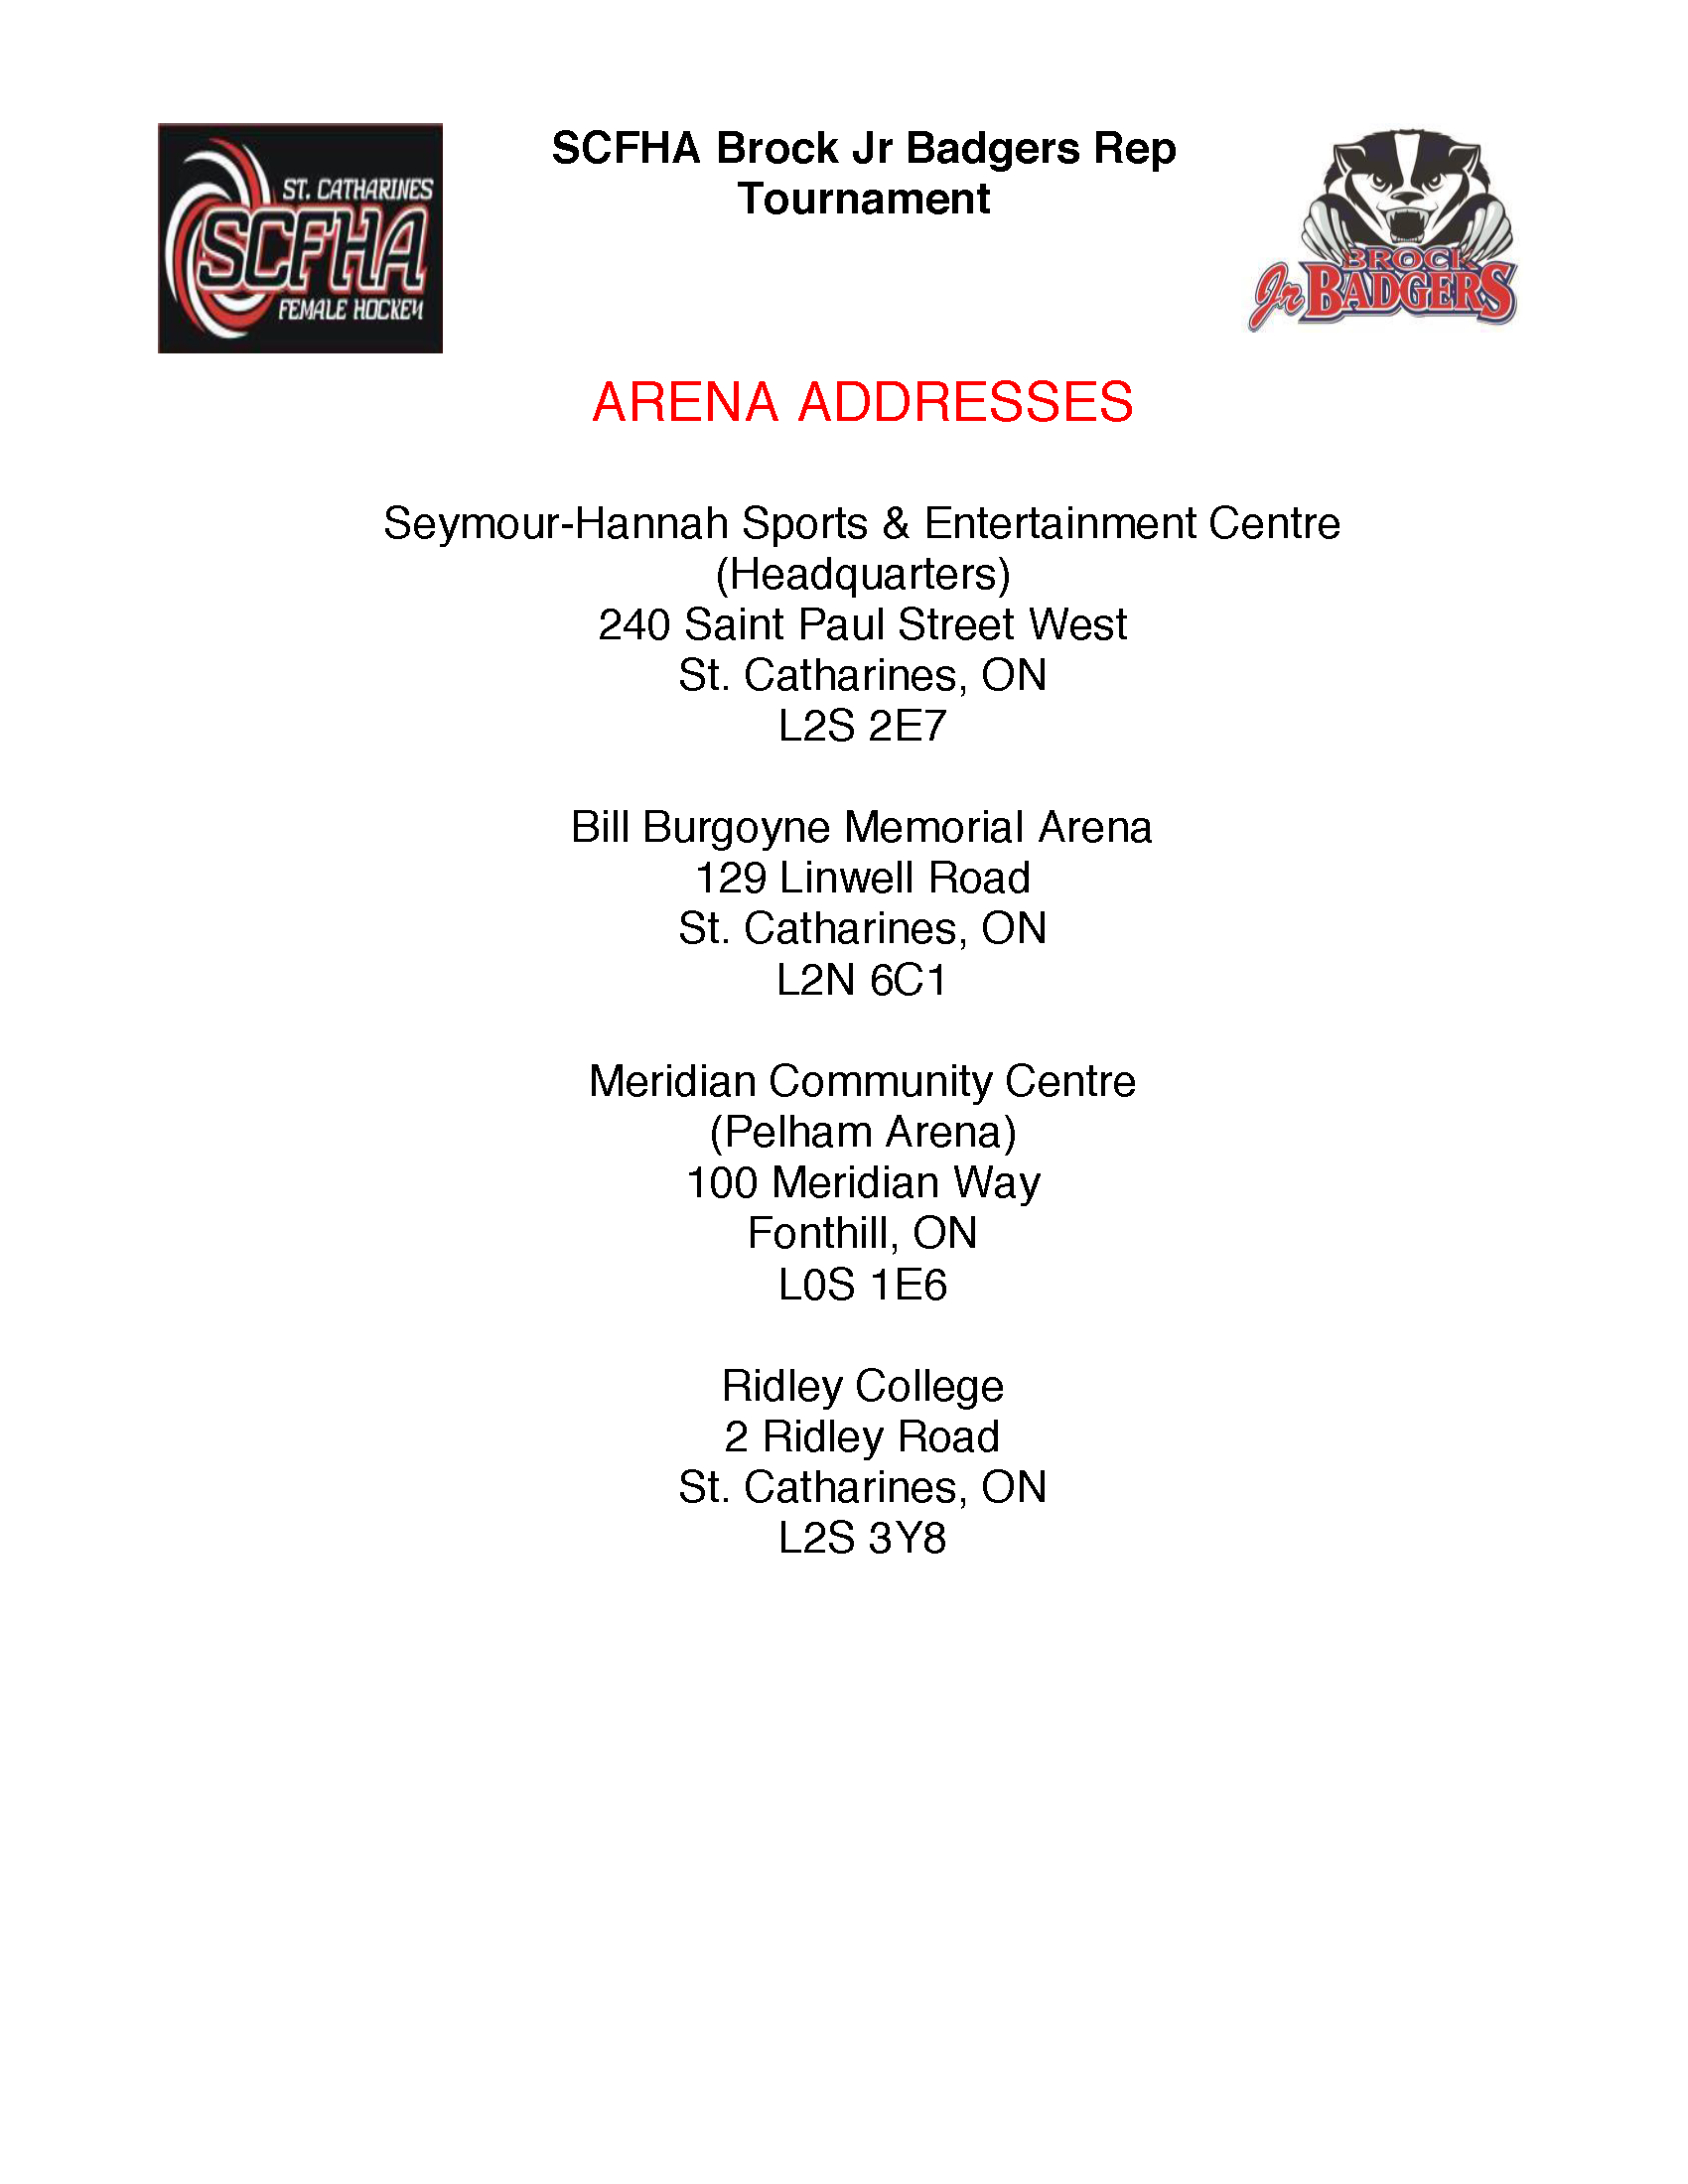 Arena-Addresses-4.png